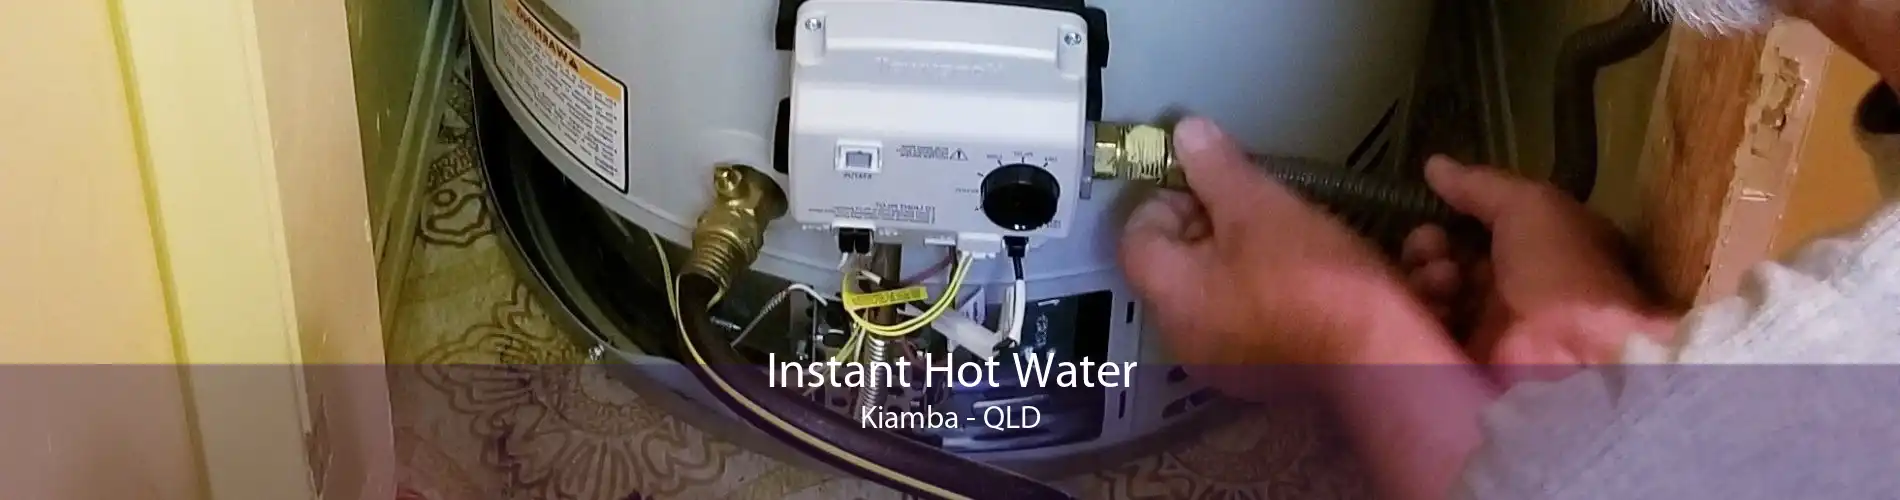 Instant Hot Water Kiamba - QLD